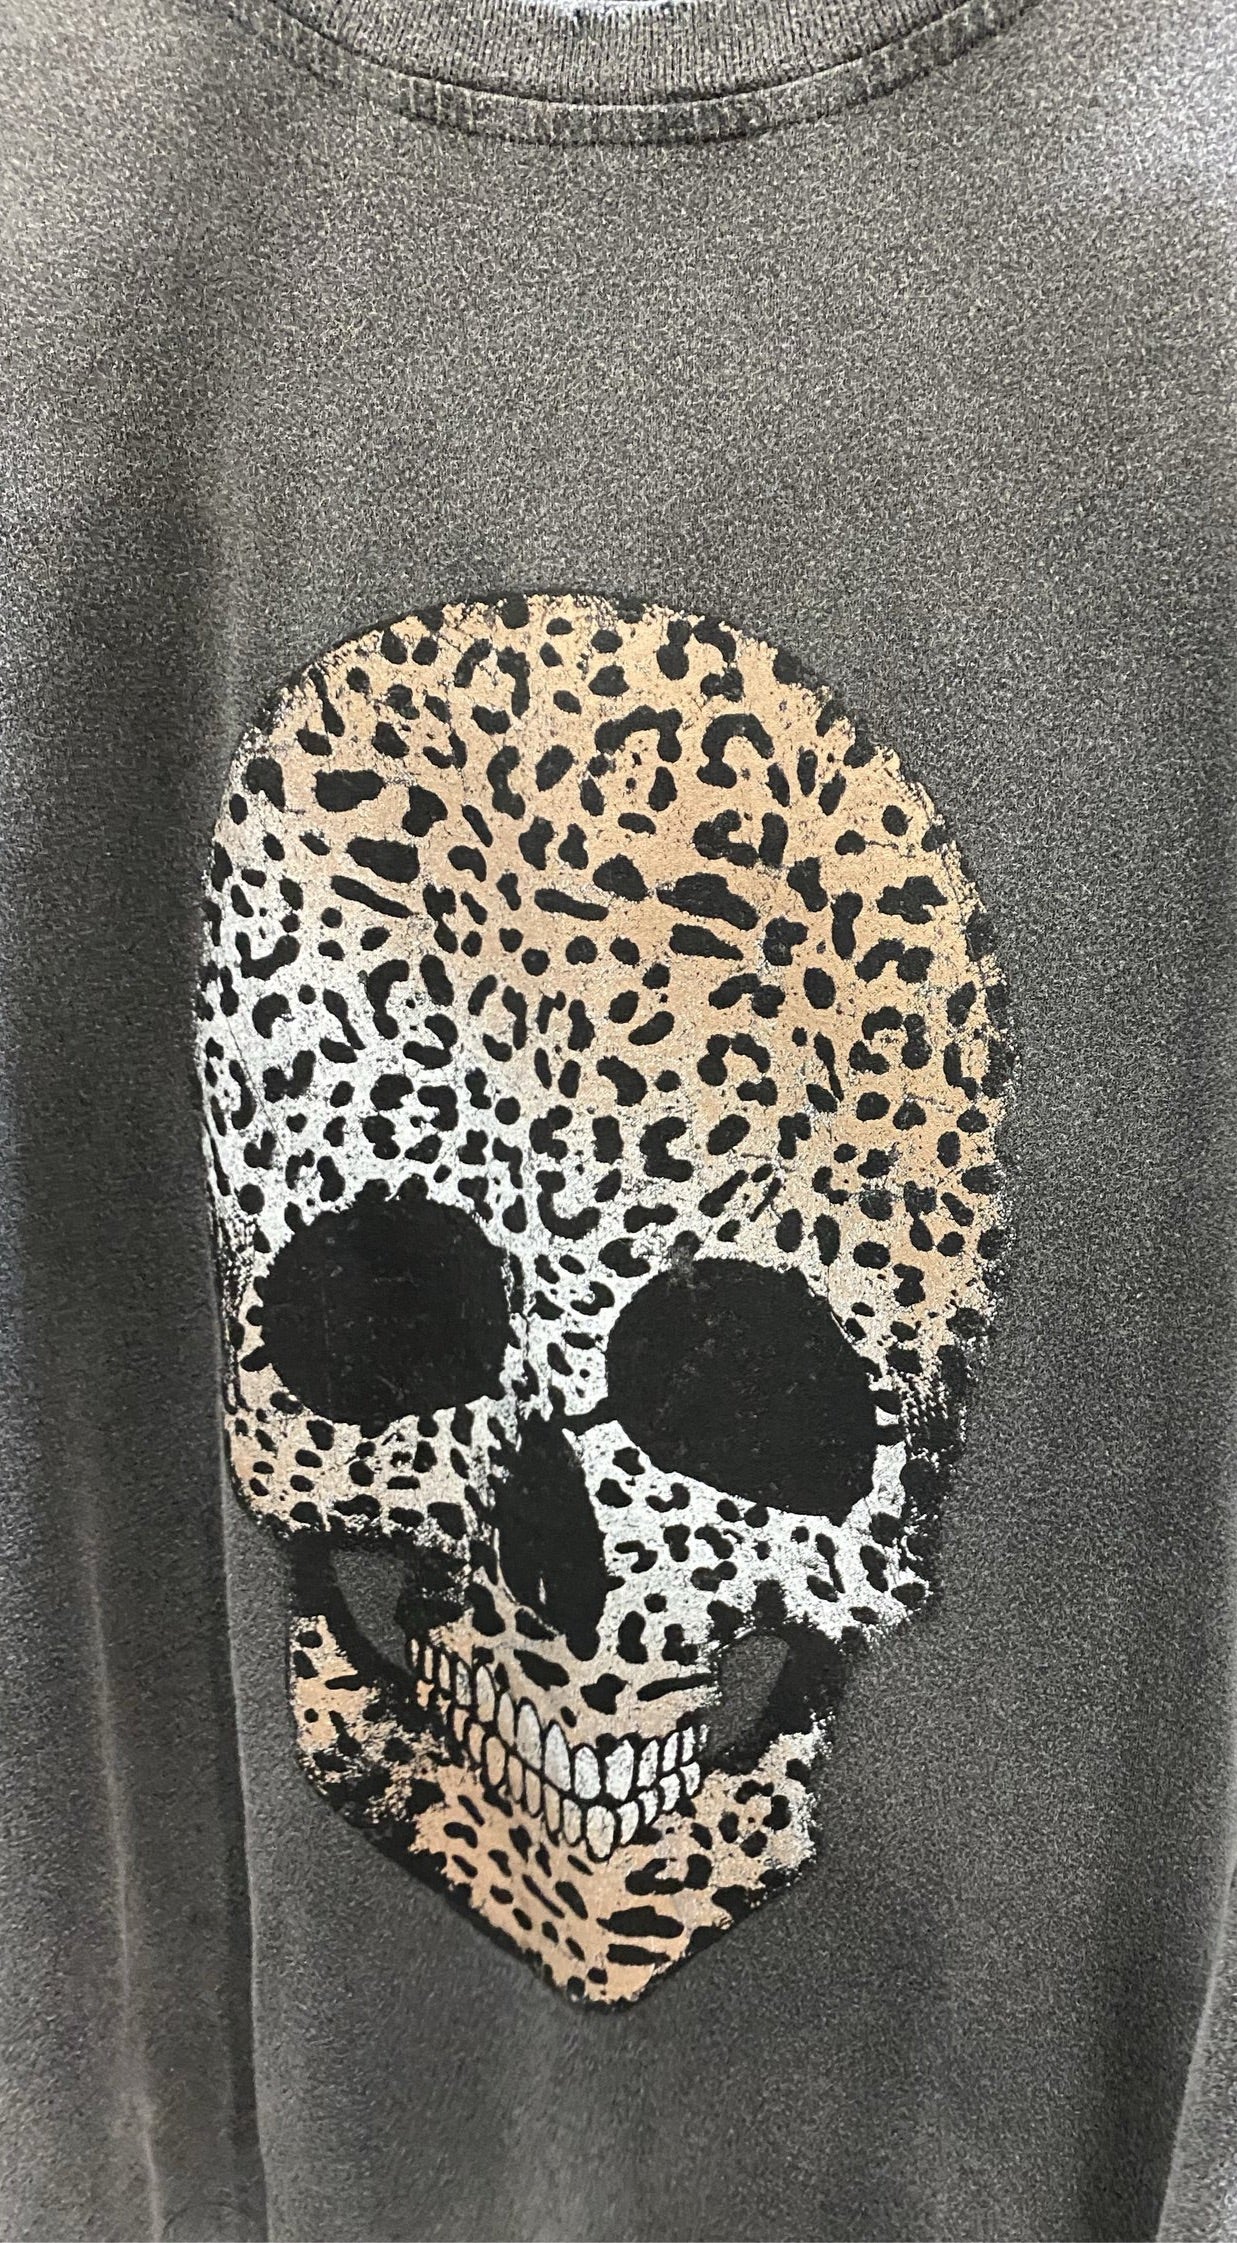 Leopard skull graphic tee